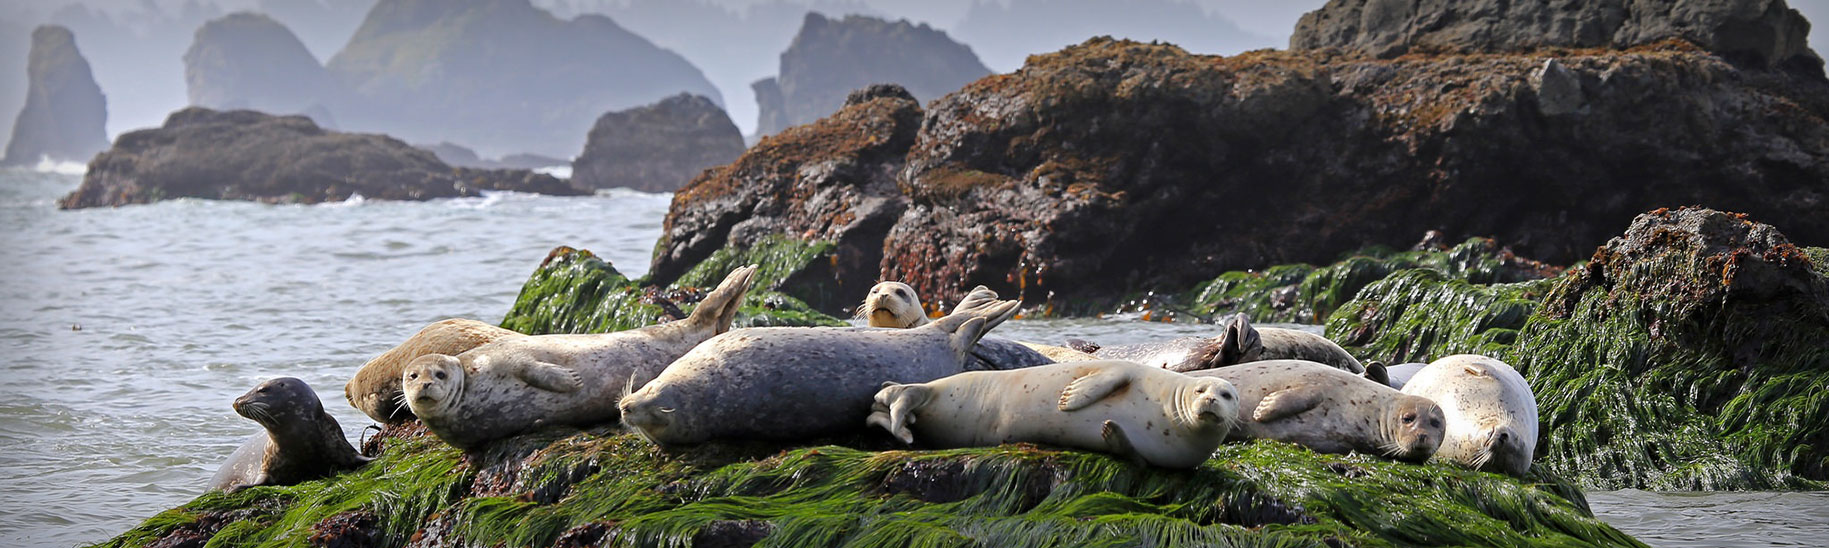 photo of sea lions on rocks